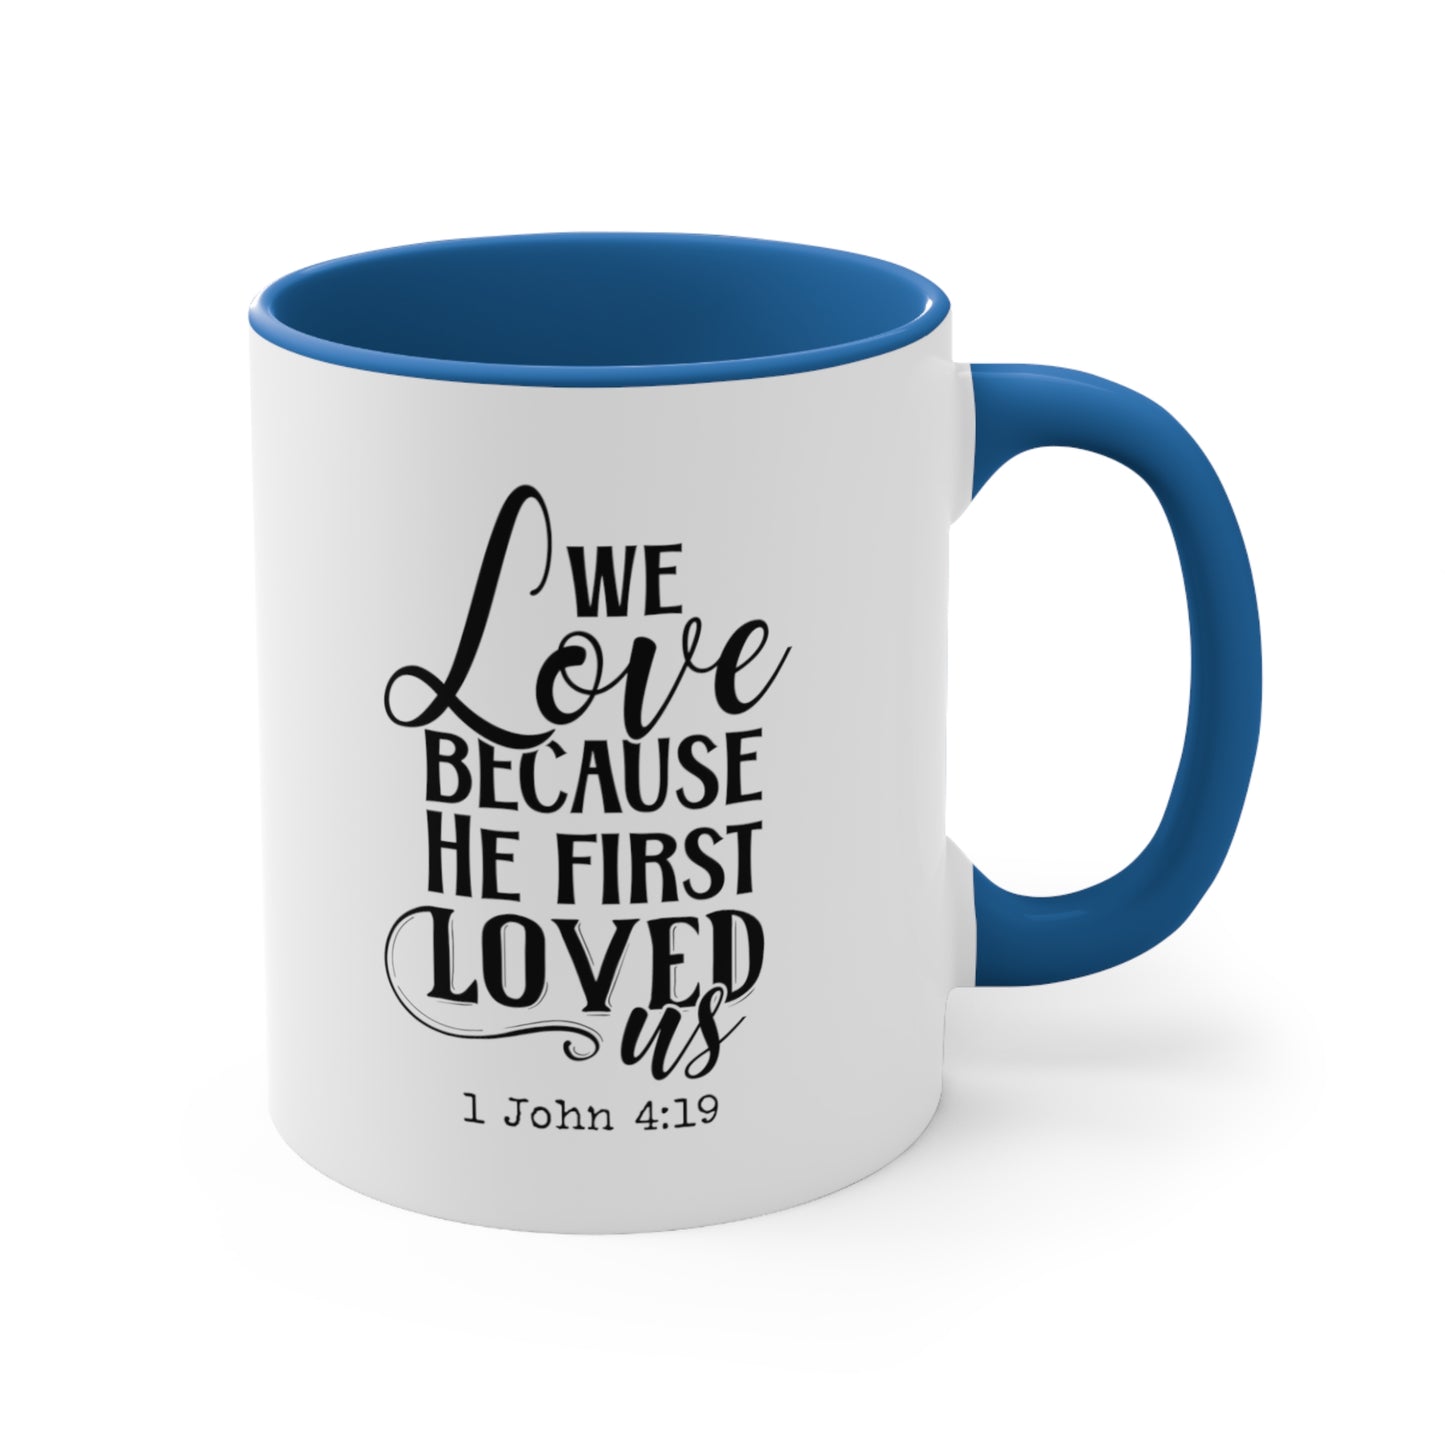 He Fist Loved Us Accent Coffee Mug, 11oz, Christian Gift, Faith Gift, Inspirational Gift